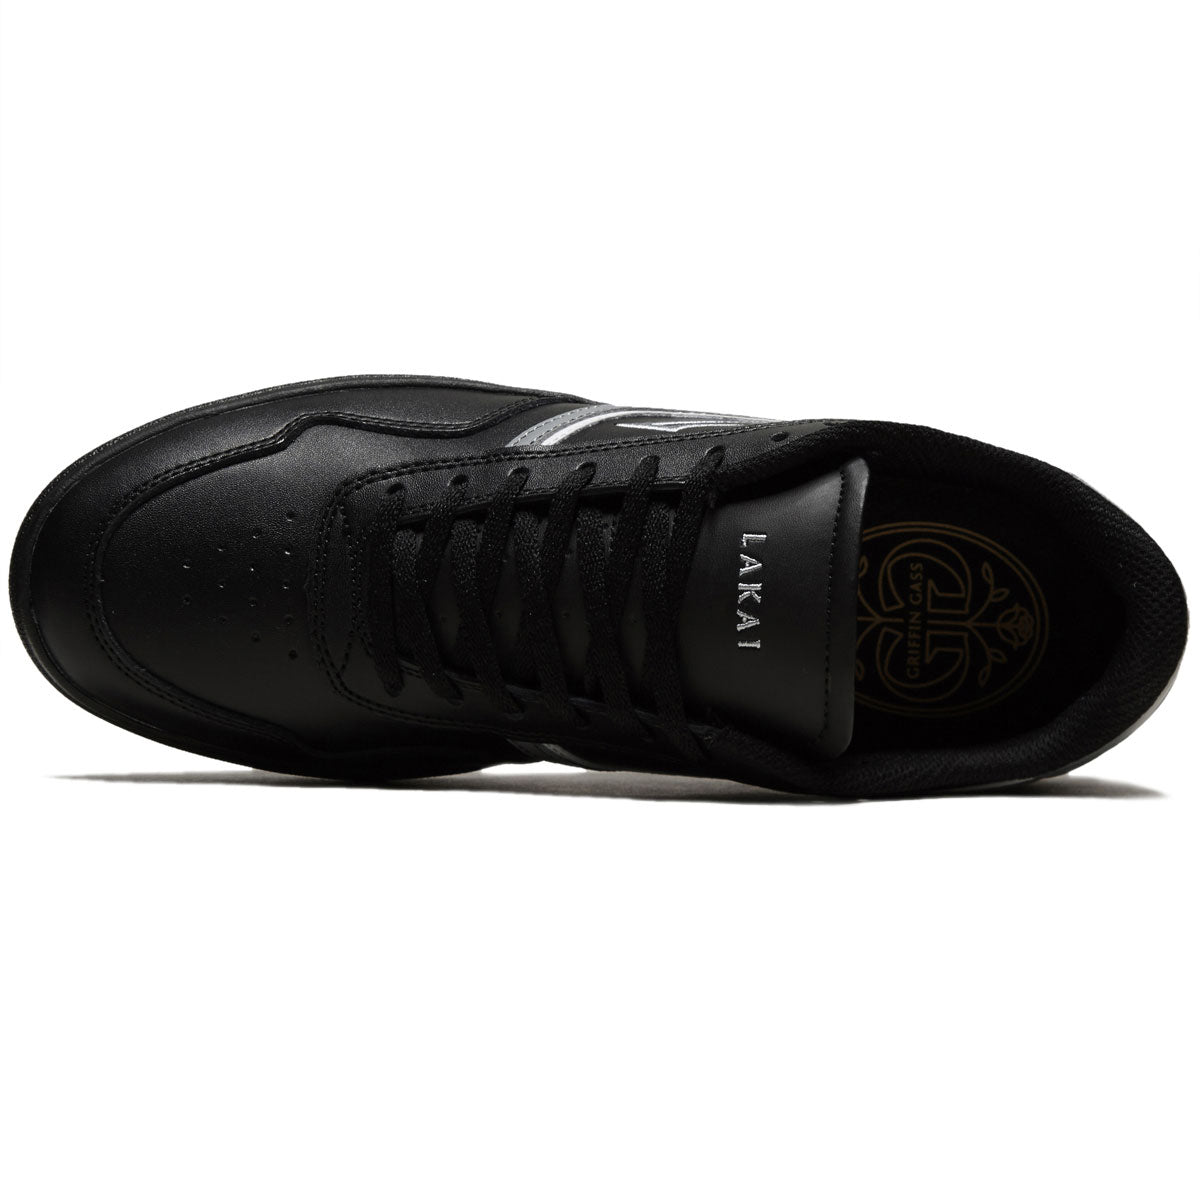 Lakai Terrace Shoes - Black/Black Leather image 3